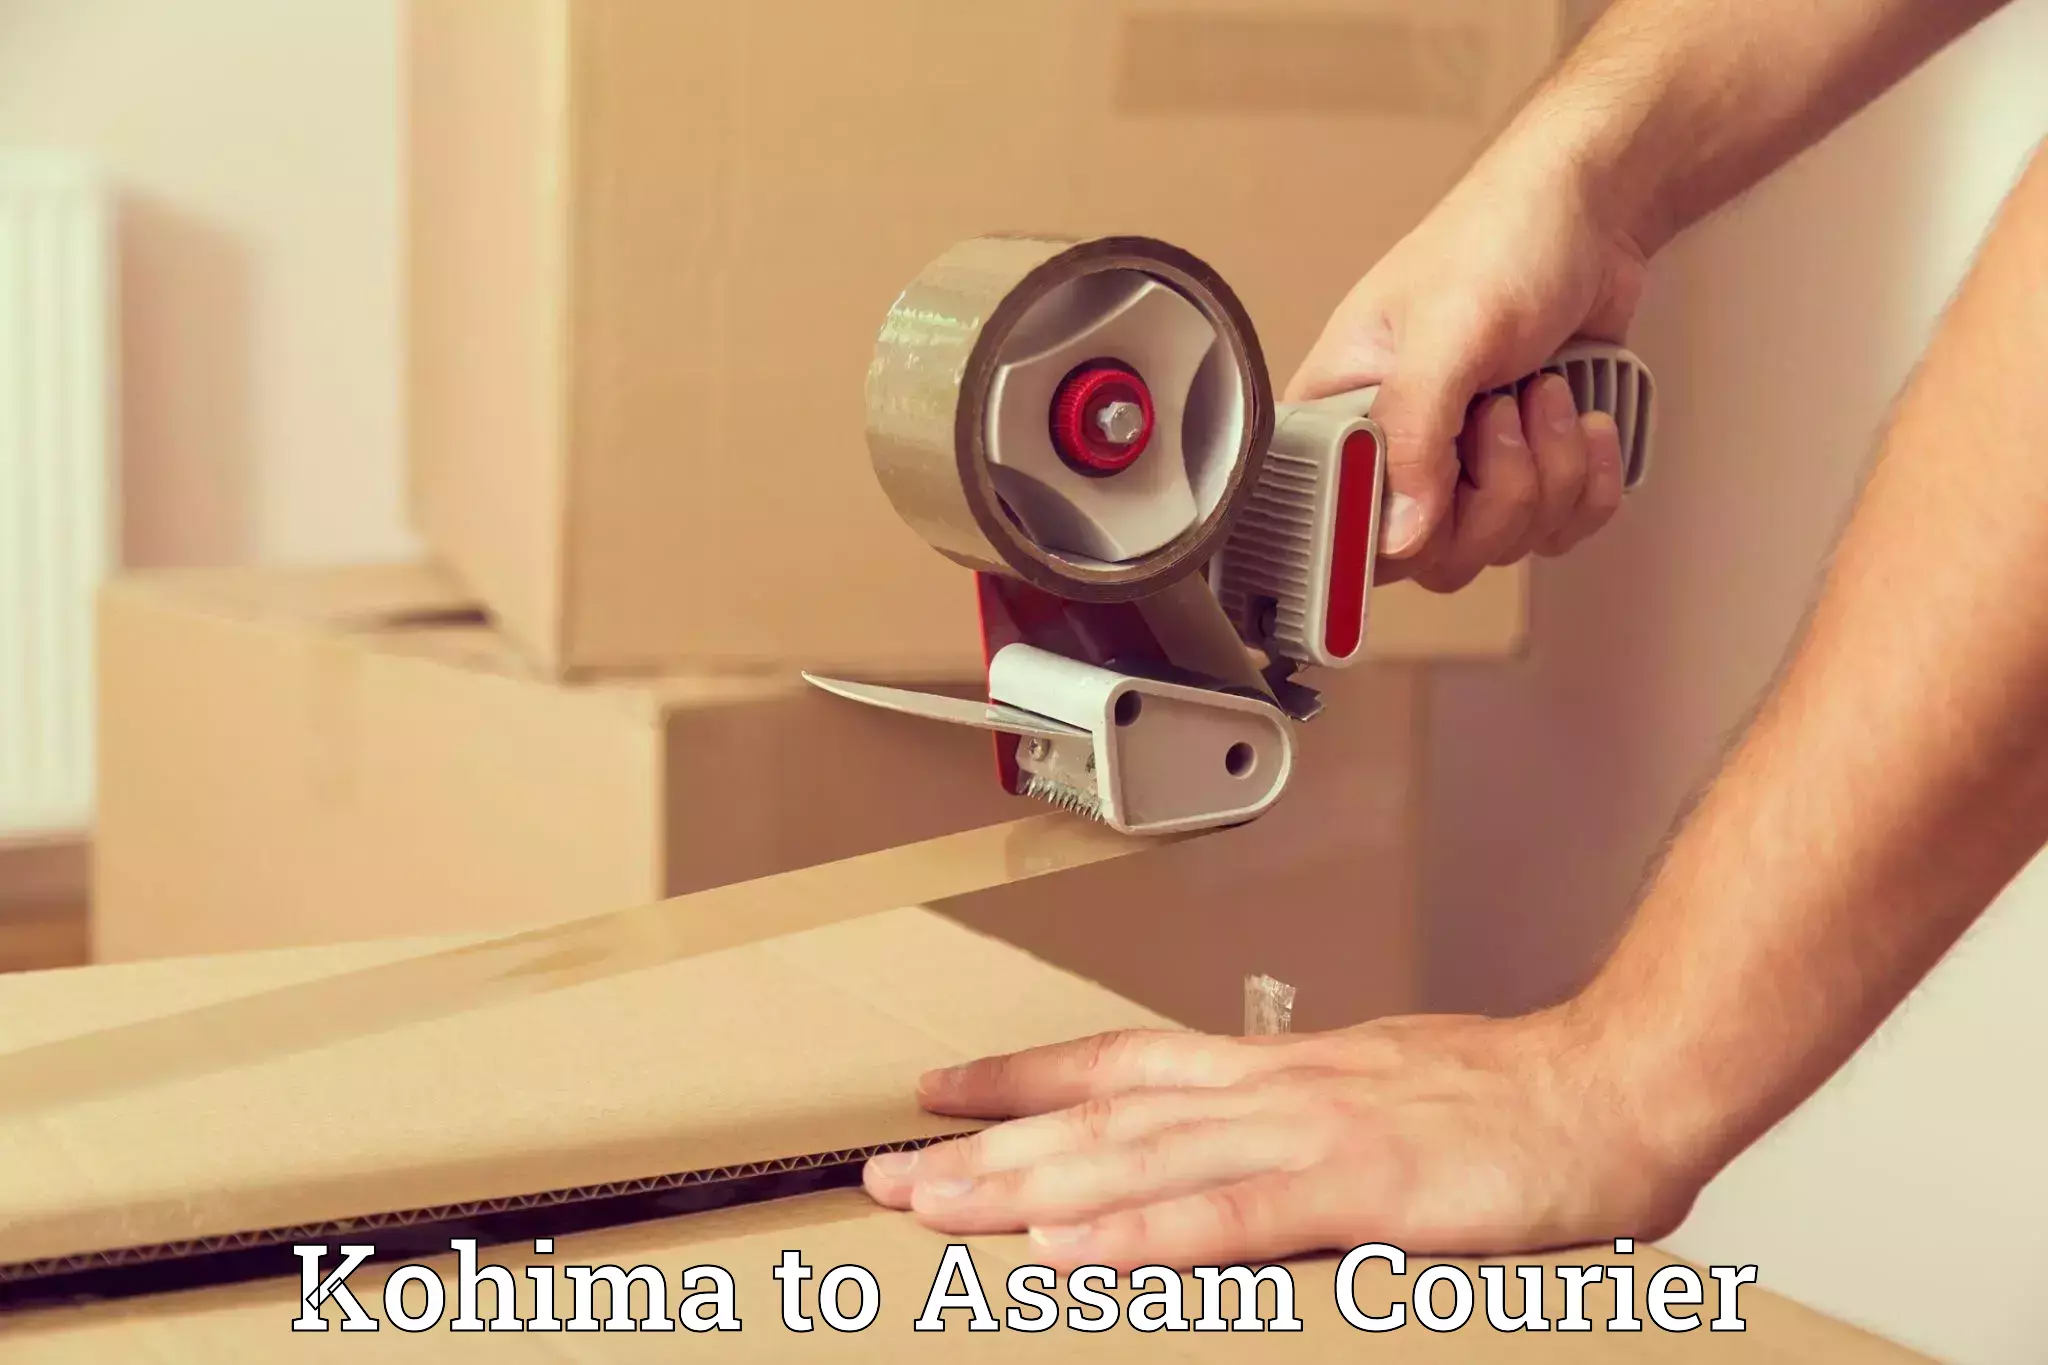 Professional moving company Kohima to Assam